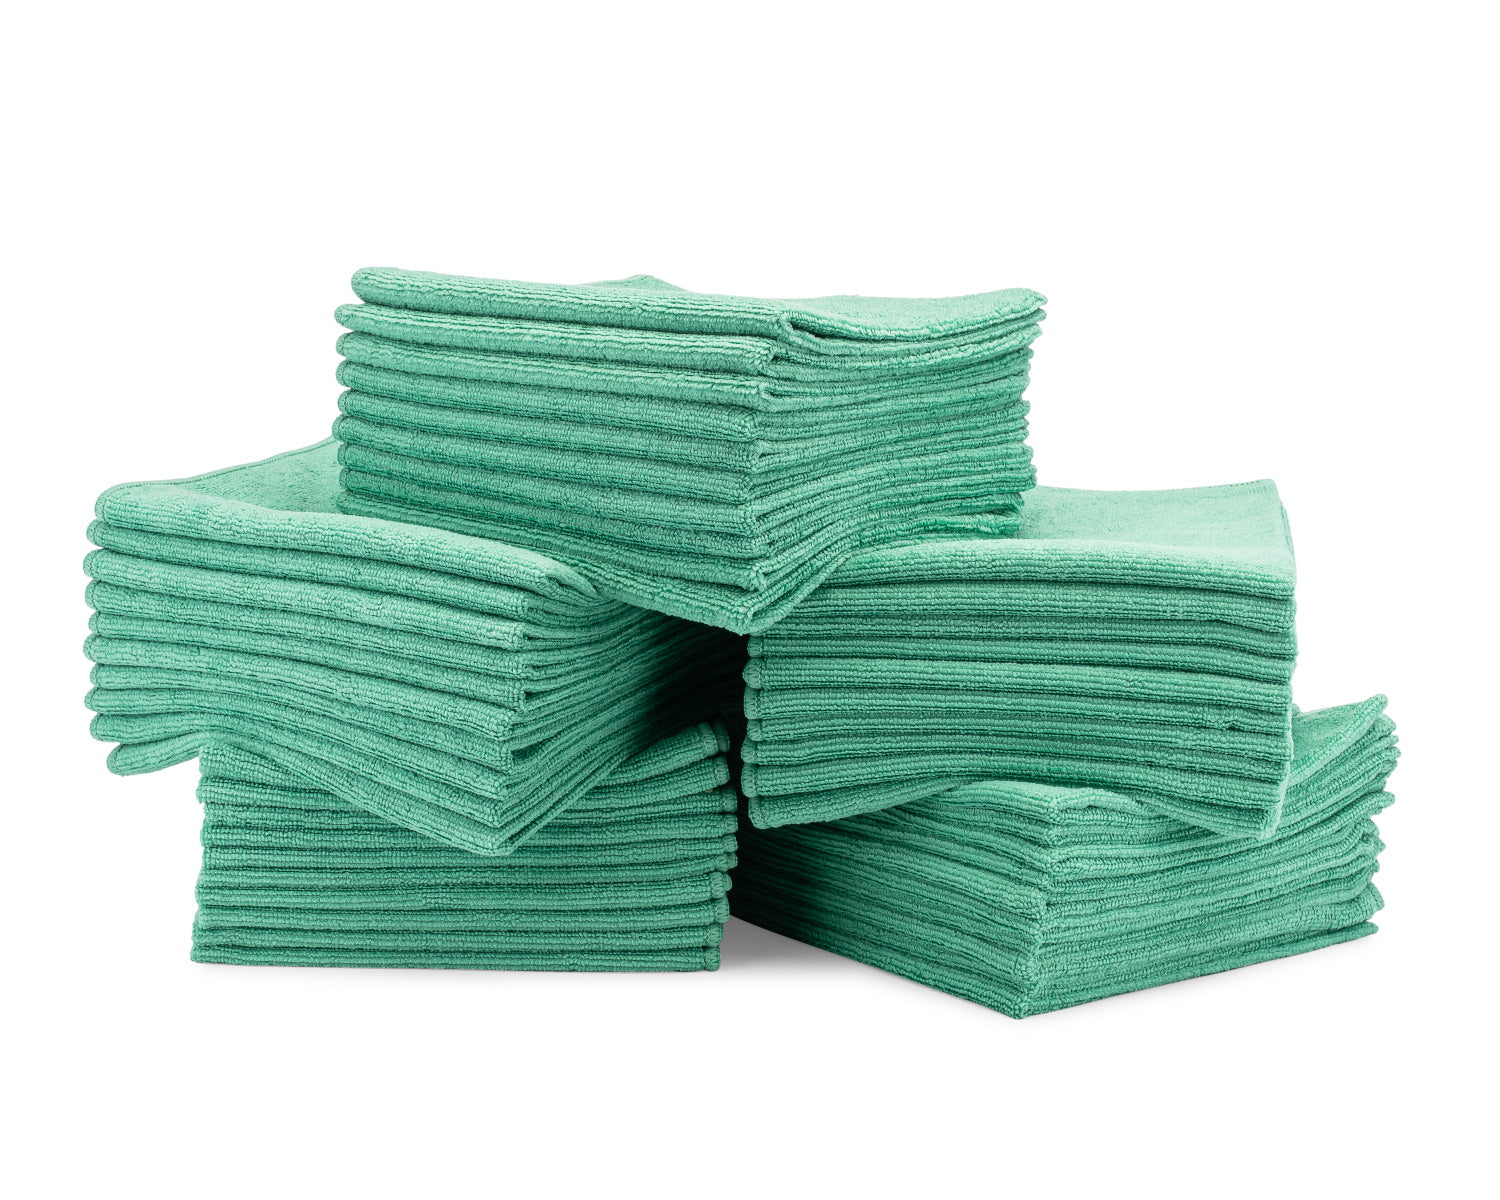 Wholesale Economy Grade Towels For Sale